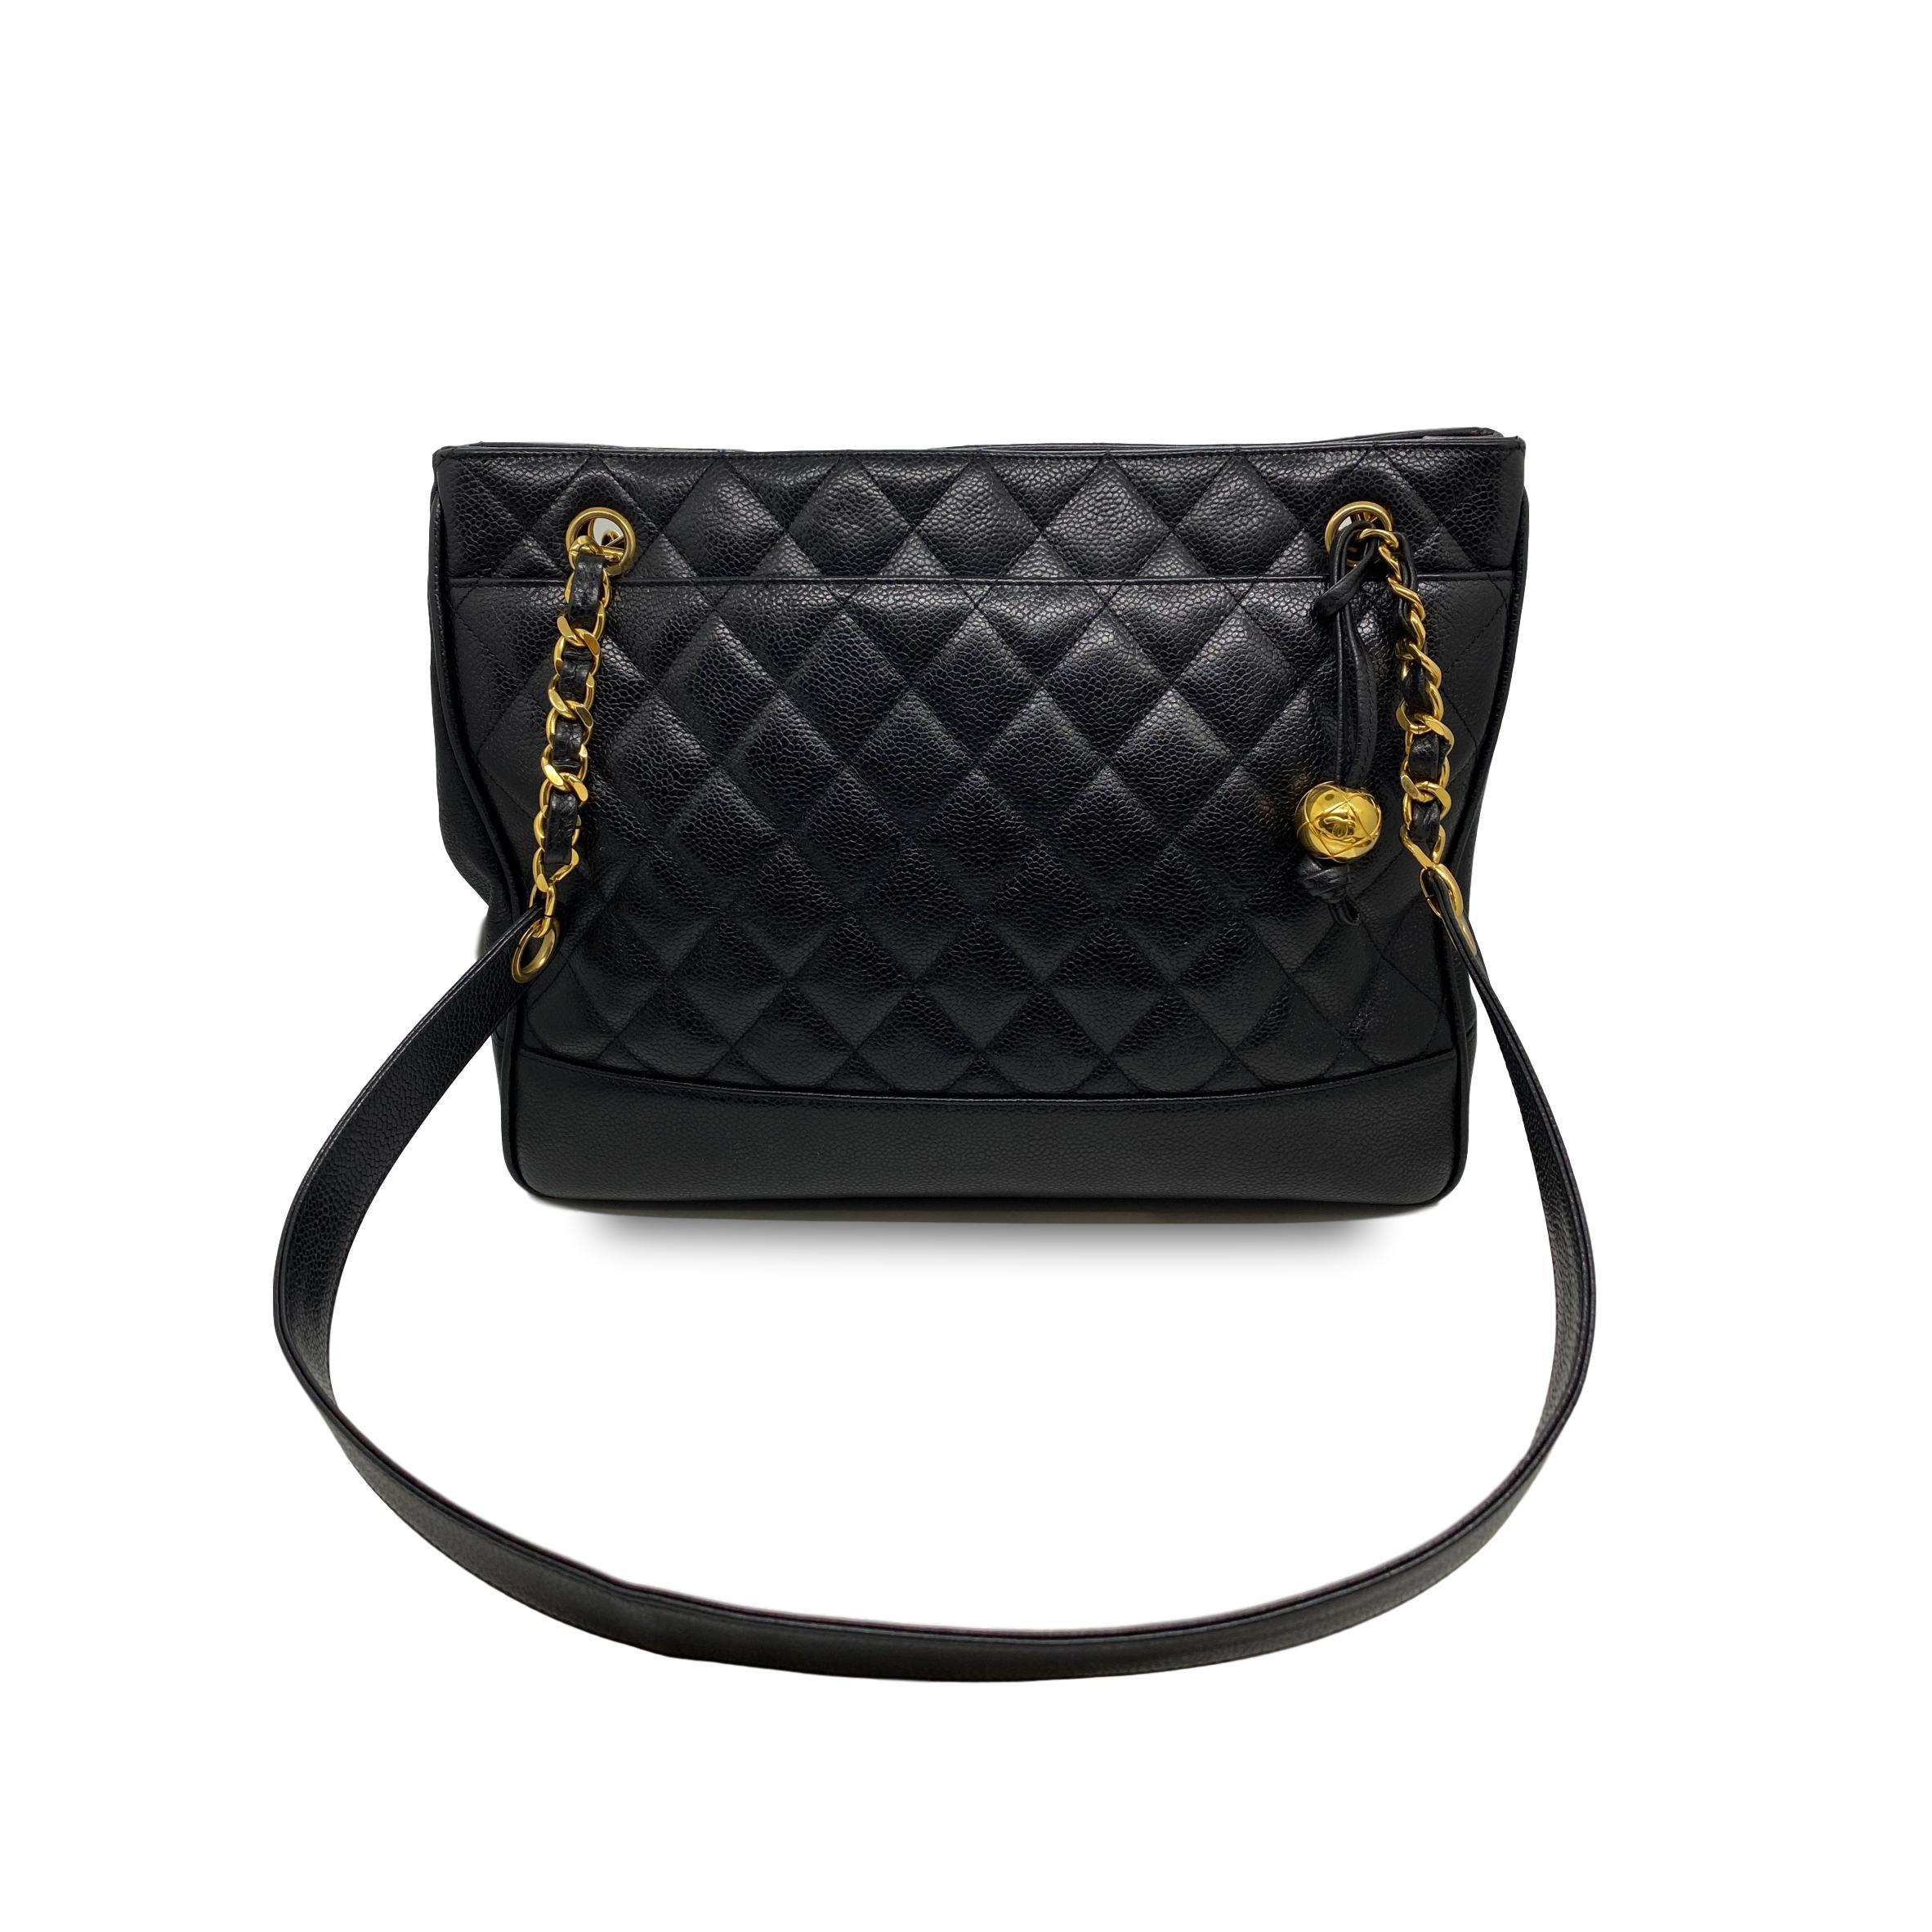 Black Chanel Quilted Caviar Leather Vintage Timeless Medium Chain Shoulder Bag, 1994.